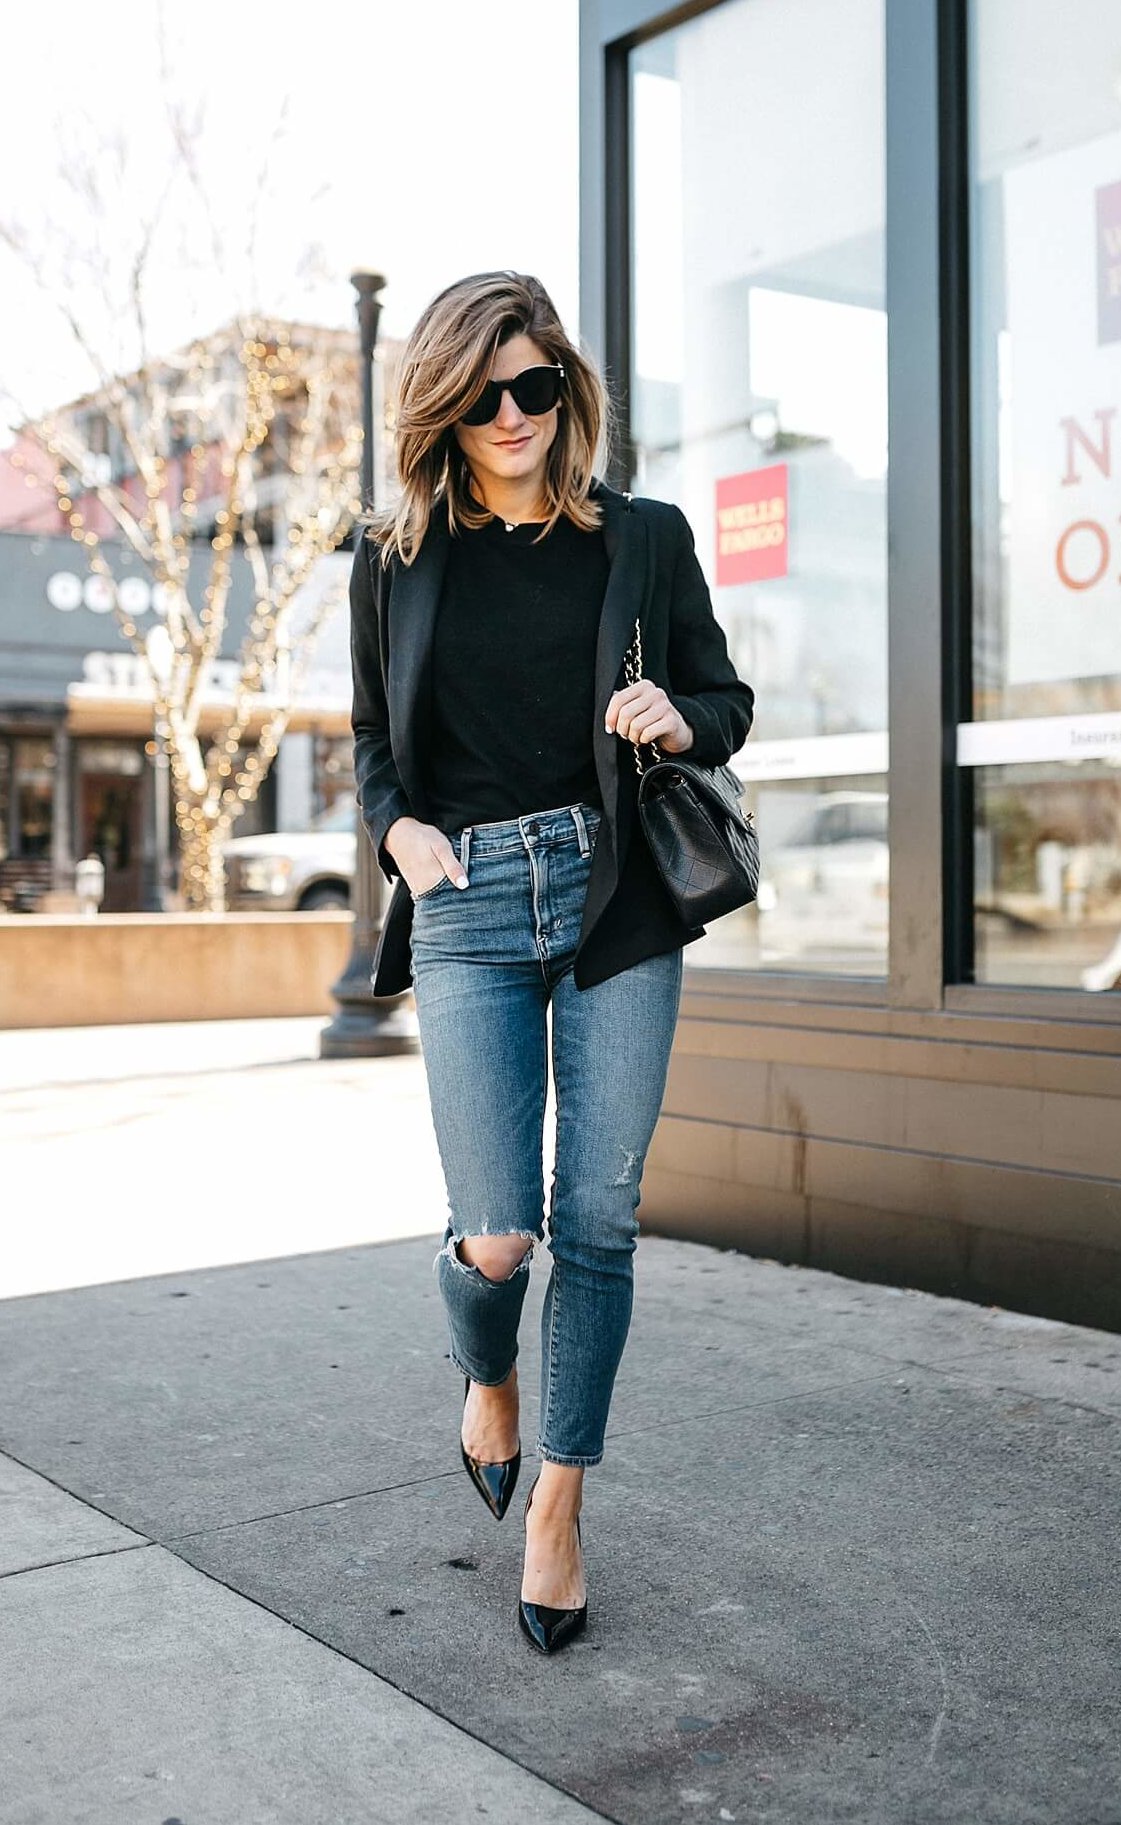 11 Sophisticated Ways to Wear Blazer with Jeans